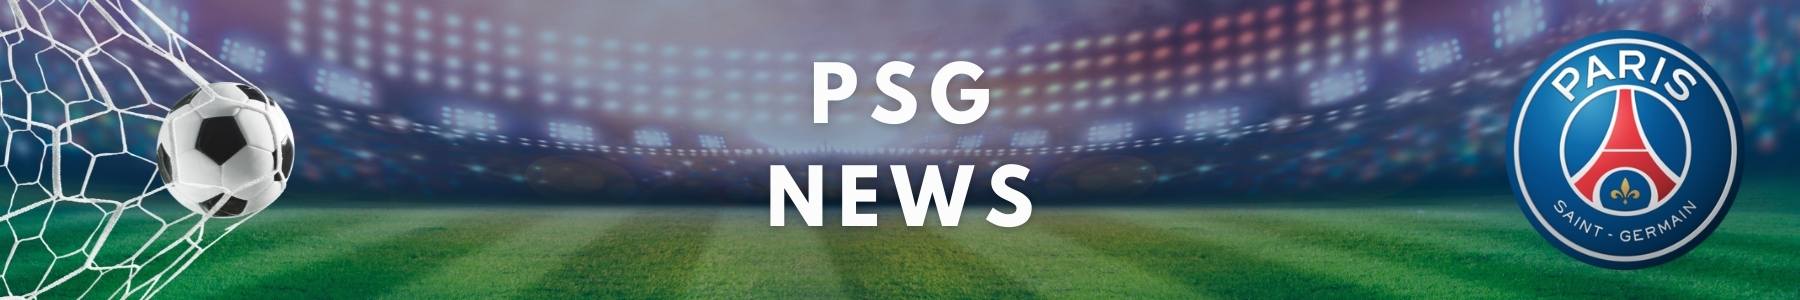 PSG - Latest News